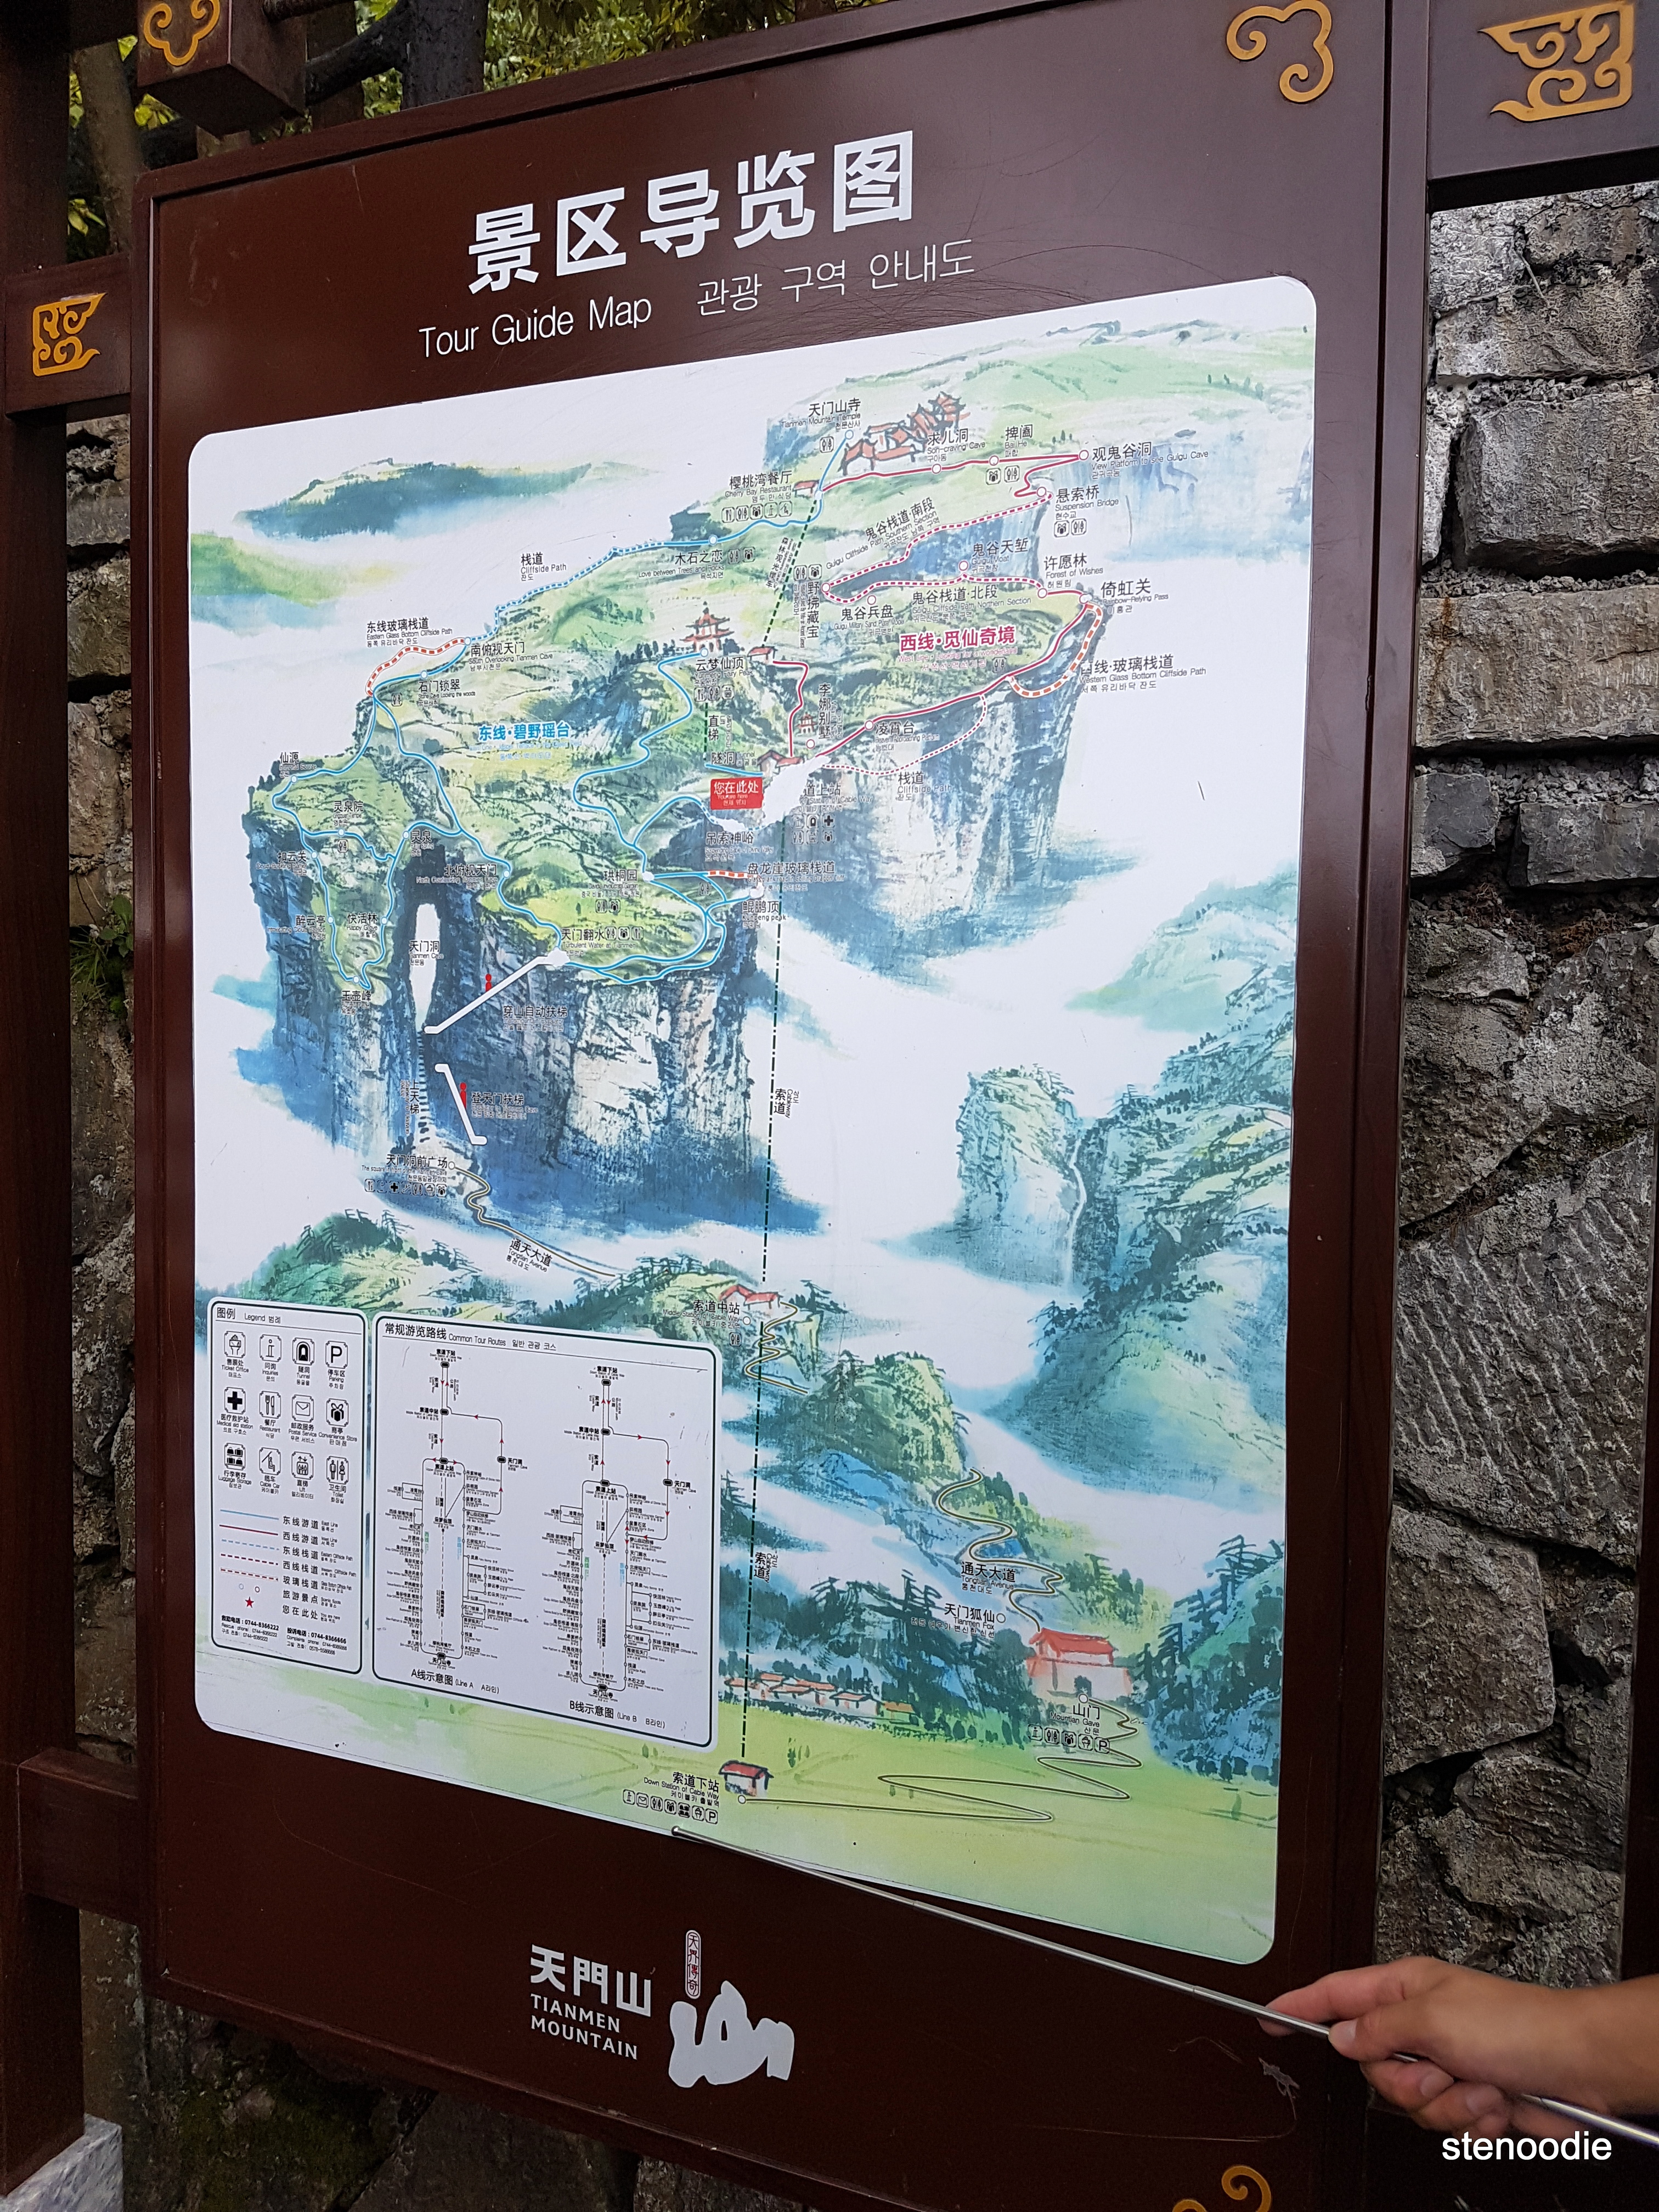 Tianmen Mountain map